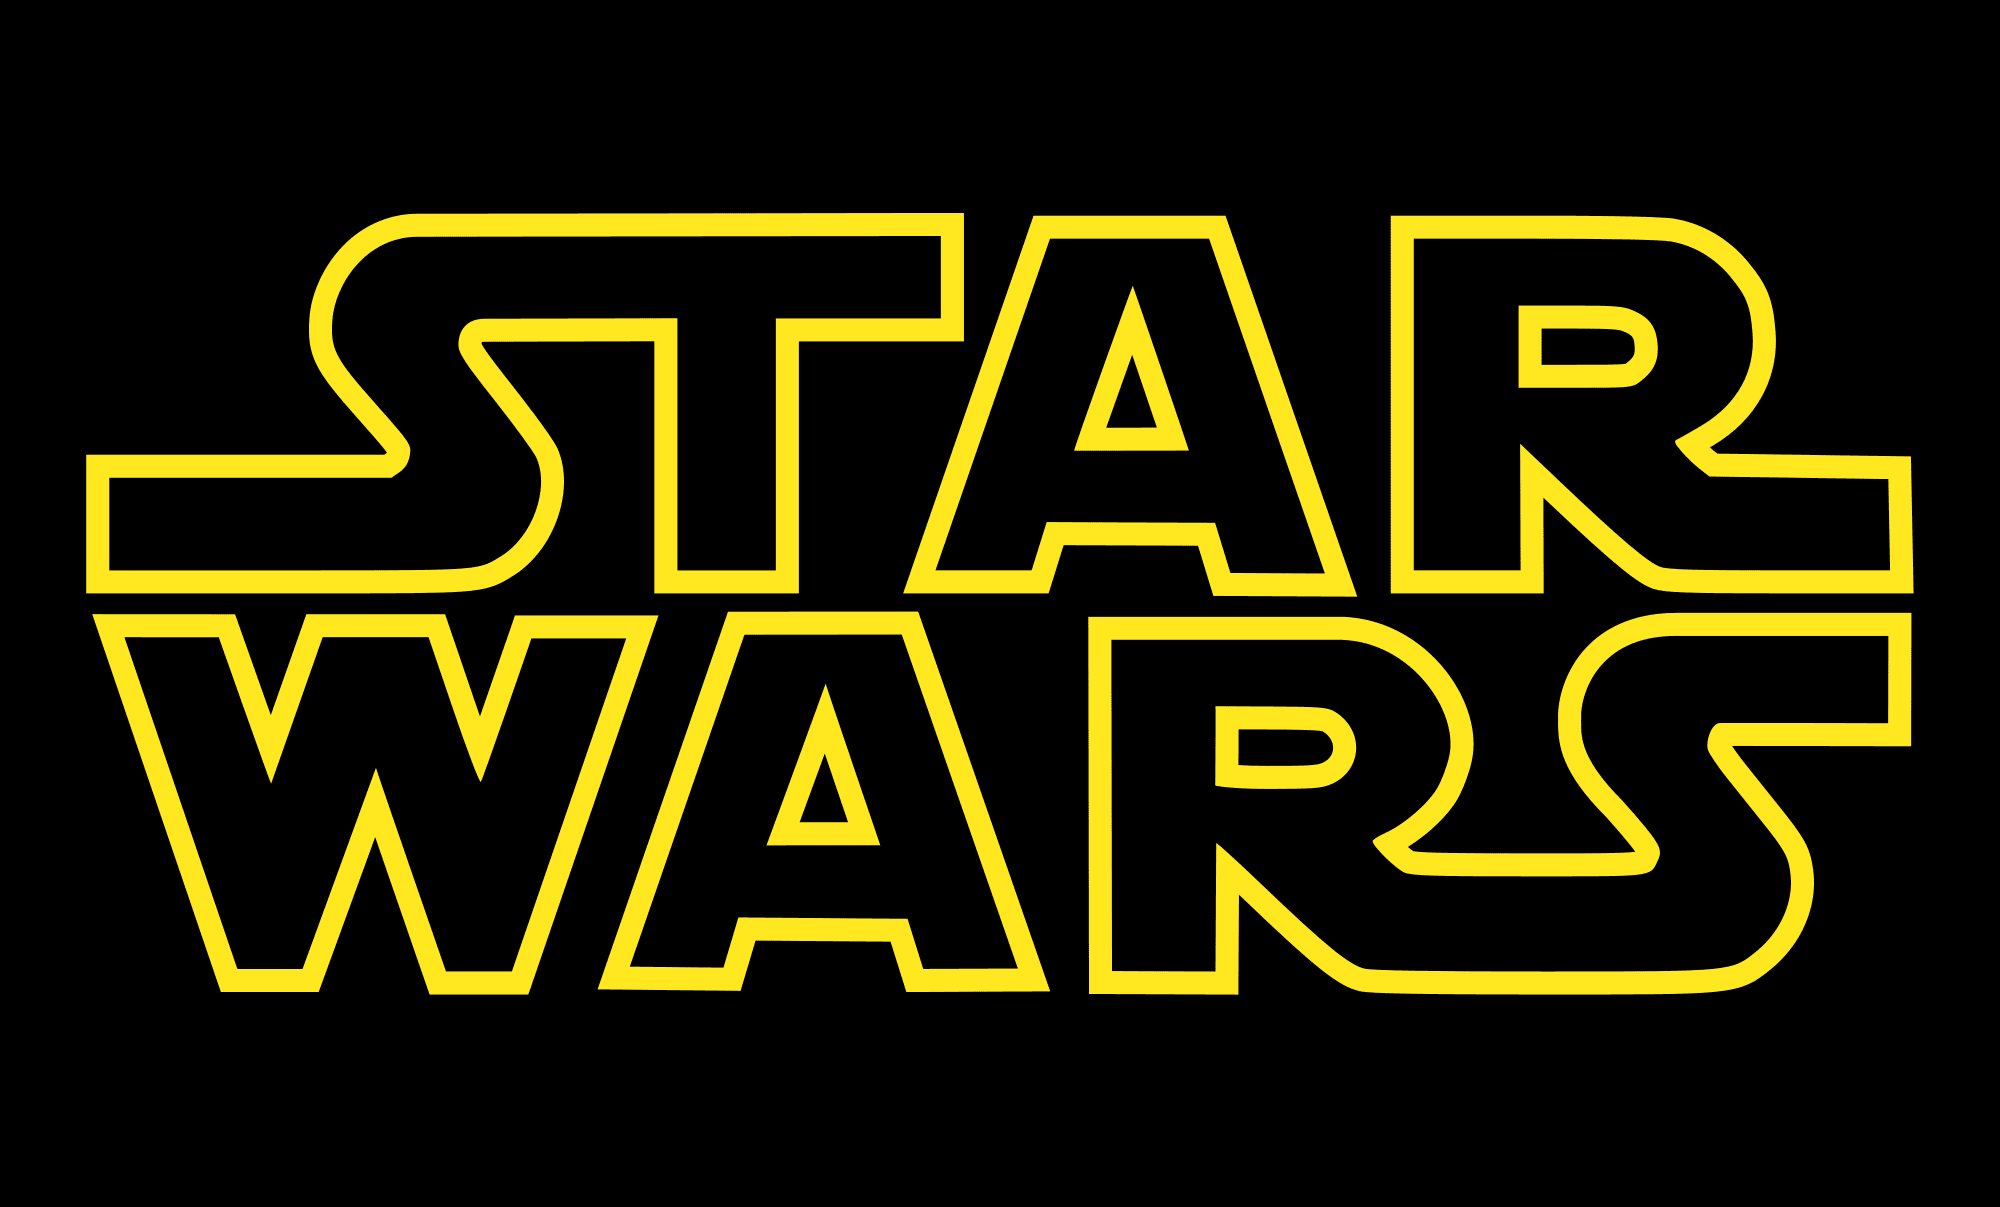 Director Jon Favreau to Write/Produce New Star Wars Series